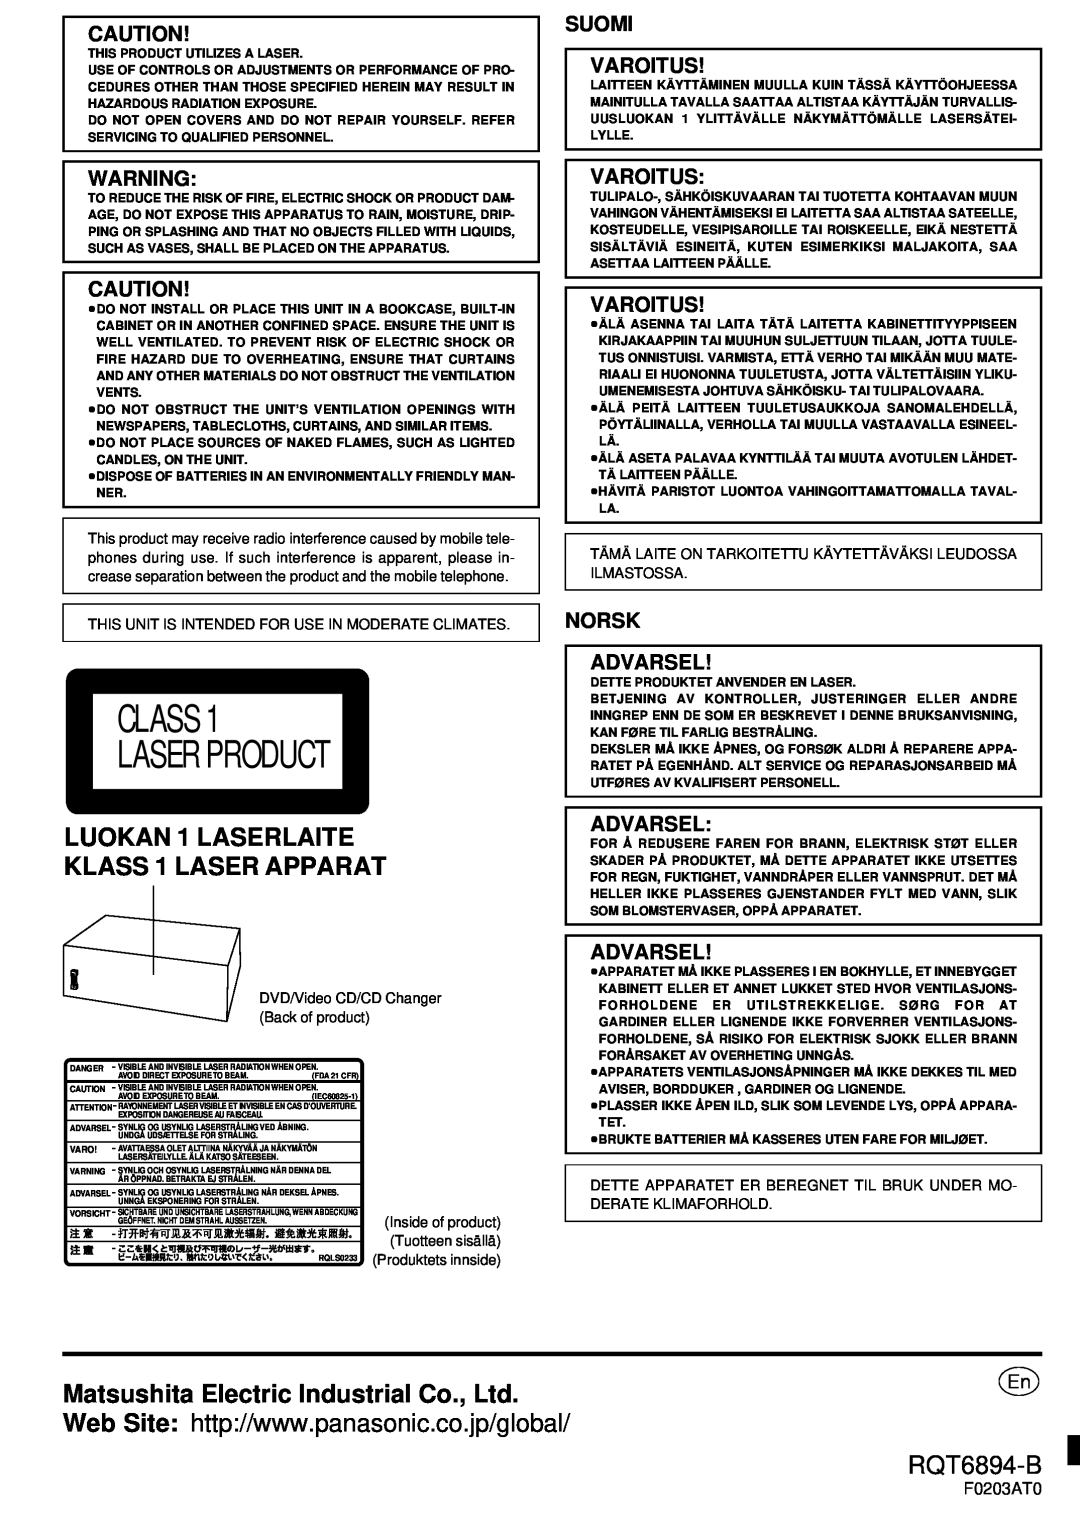 Technics SC-DV290 manual LUOKAN 1 LASERLAITE KLASS 1 LASER APPARAT, RQT6894-B, Suomi Varoitus, Norsk Advarsel 